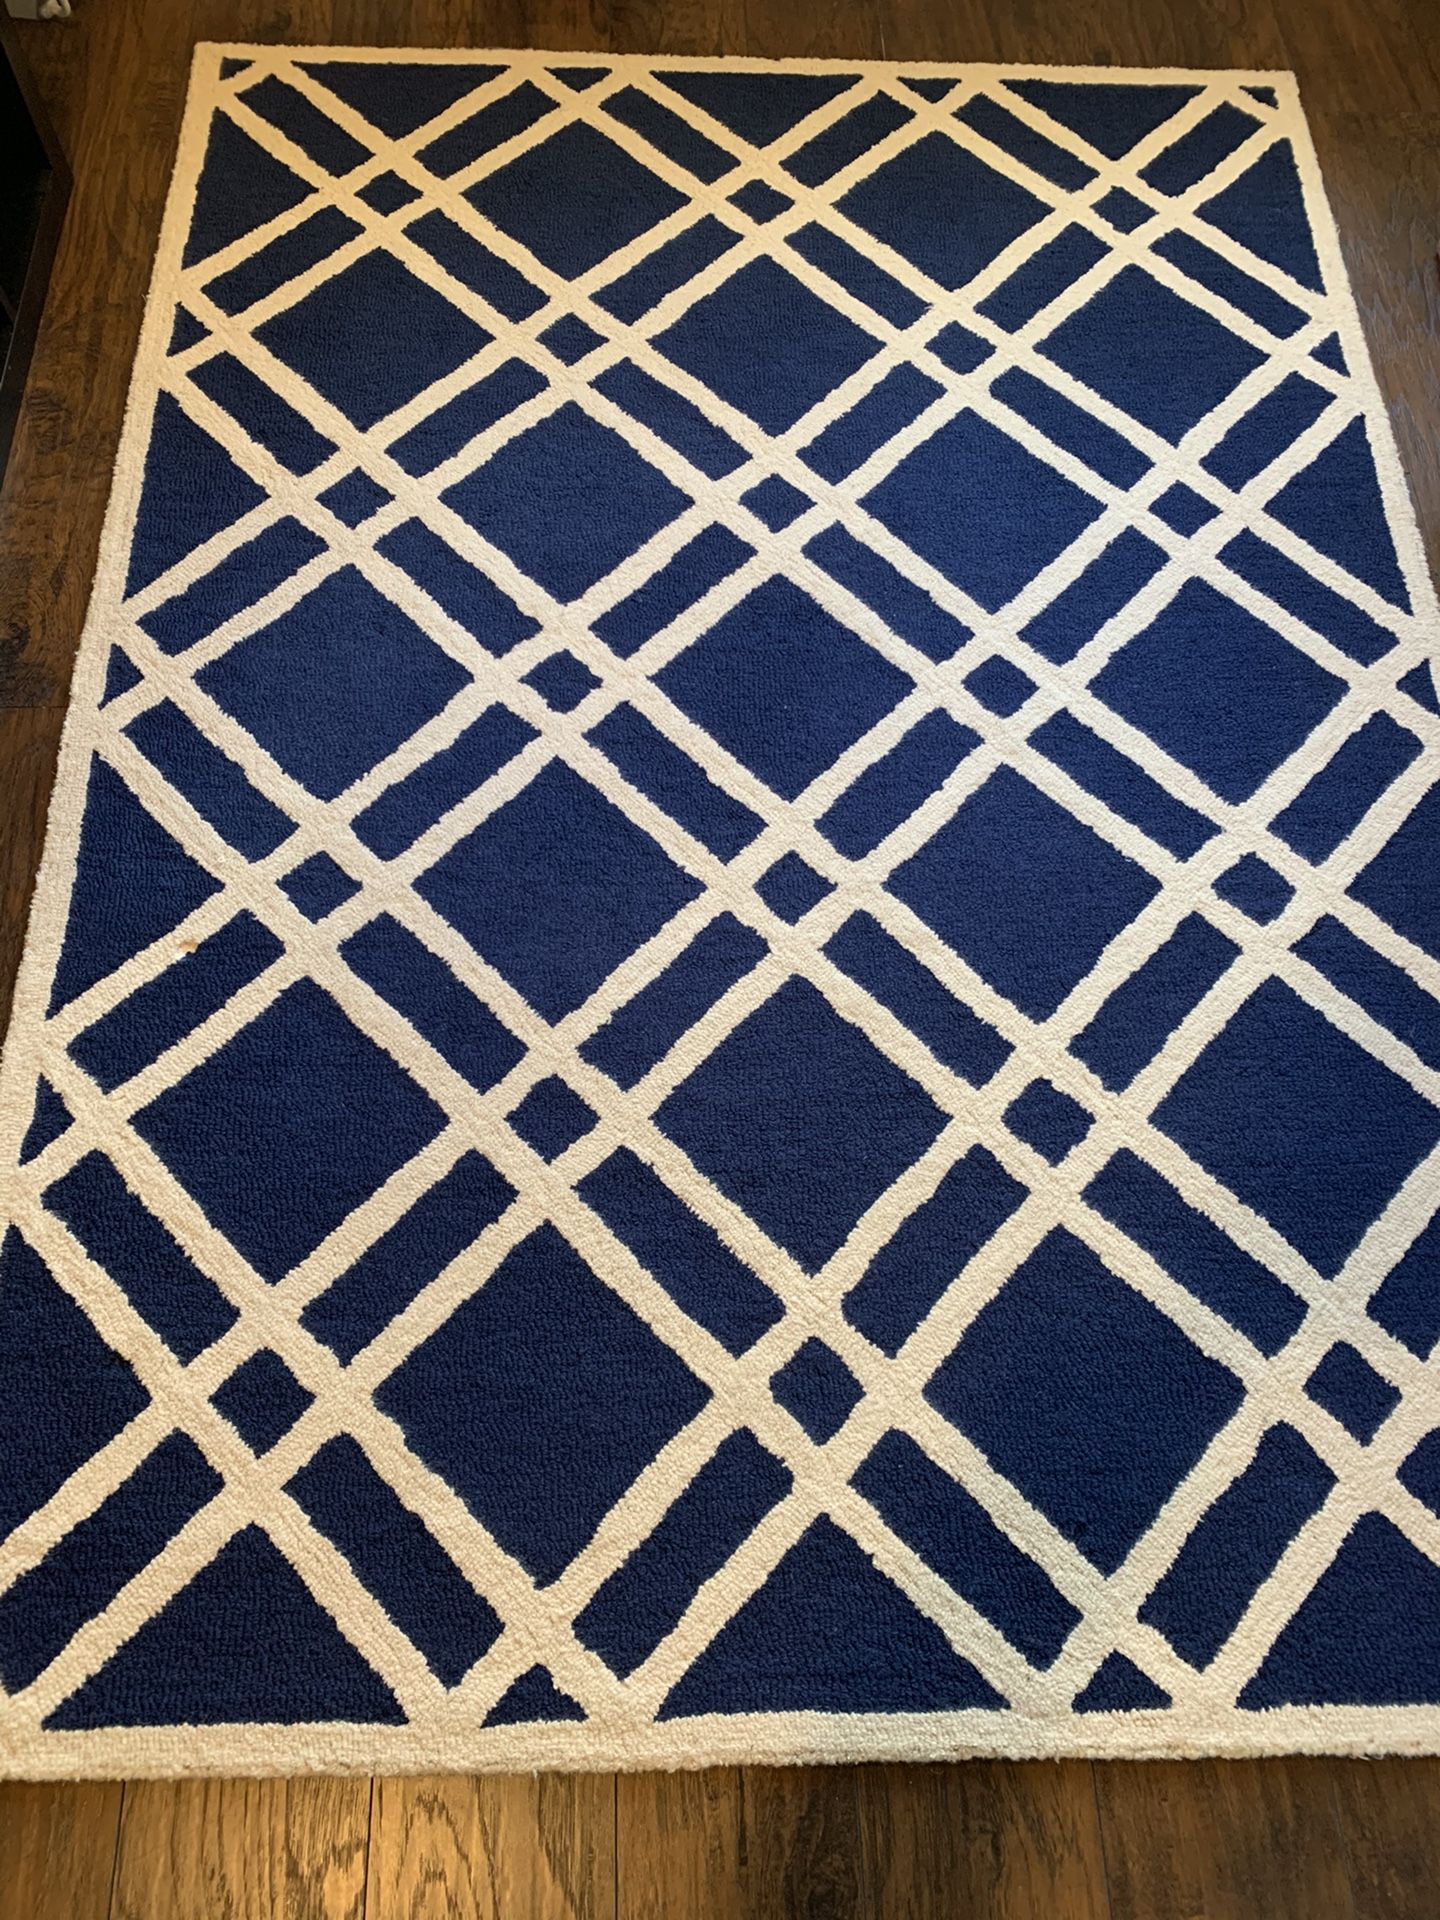 5x7 tight knit rug